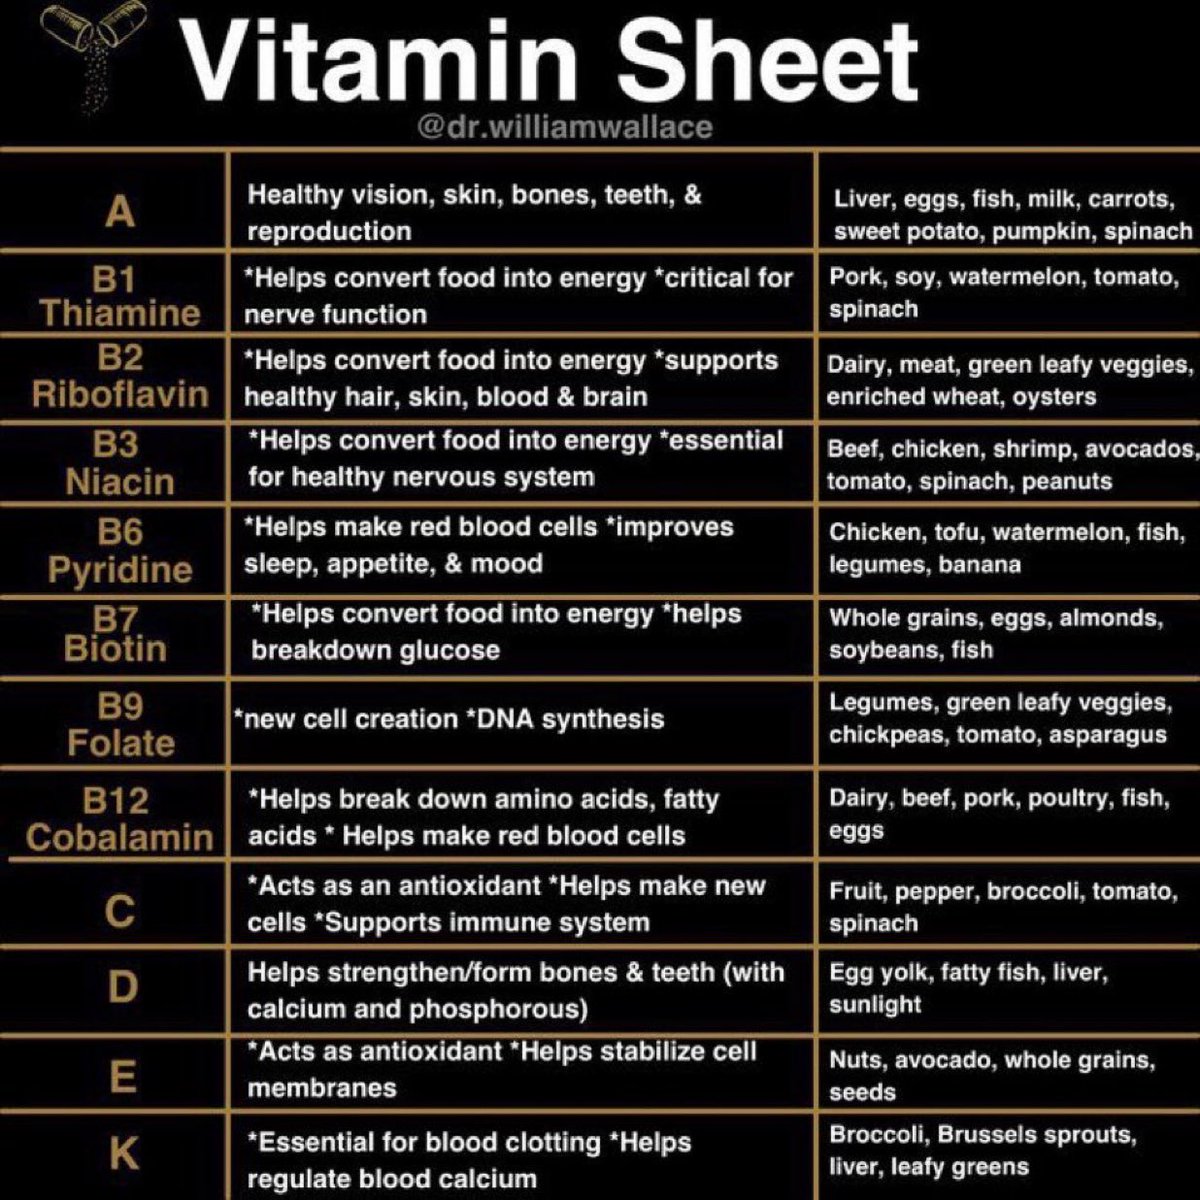 Vitamin sheet